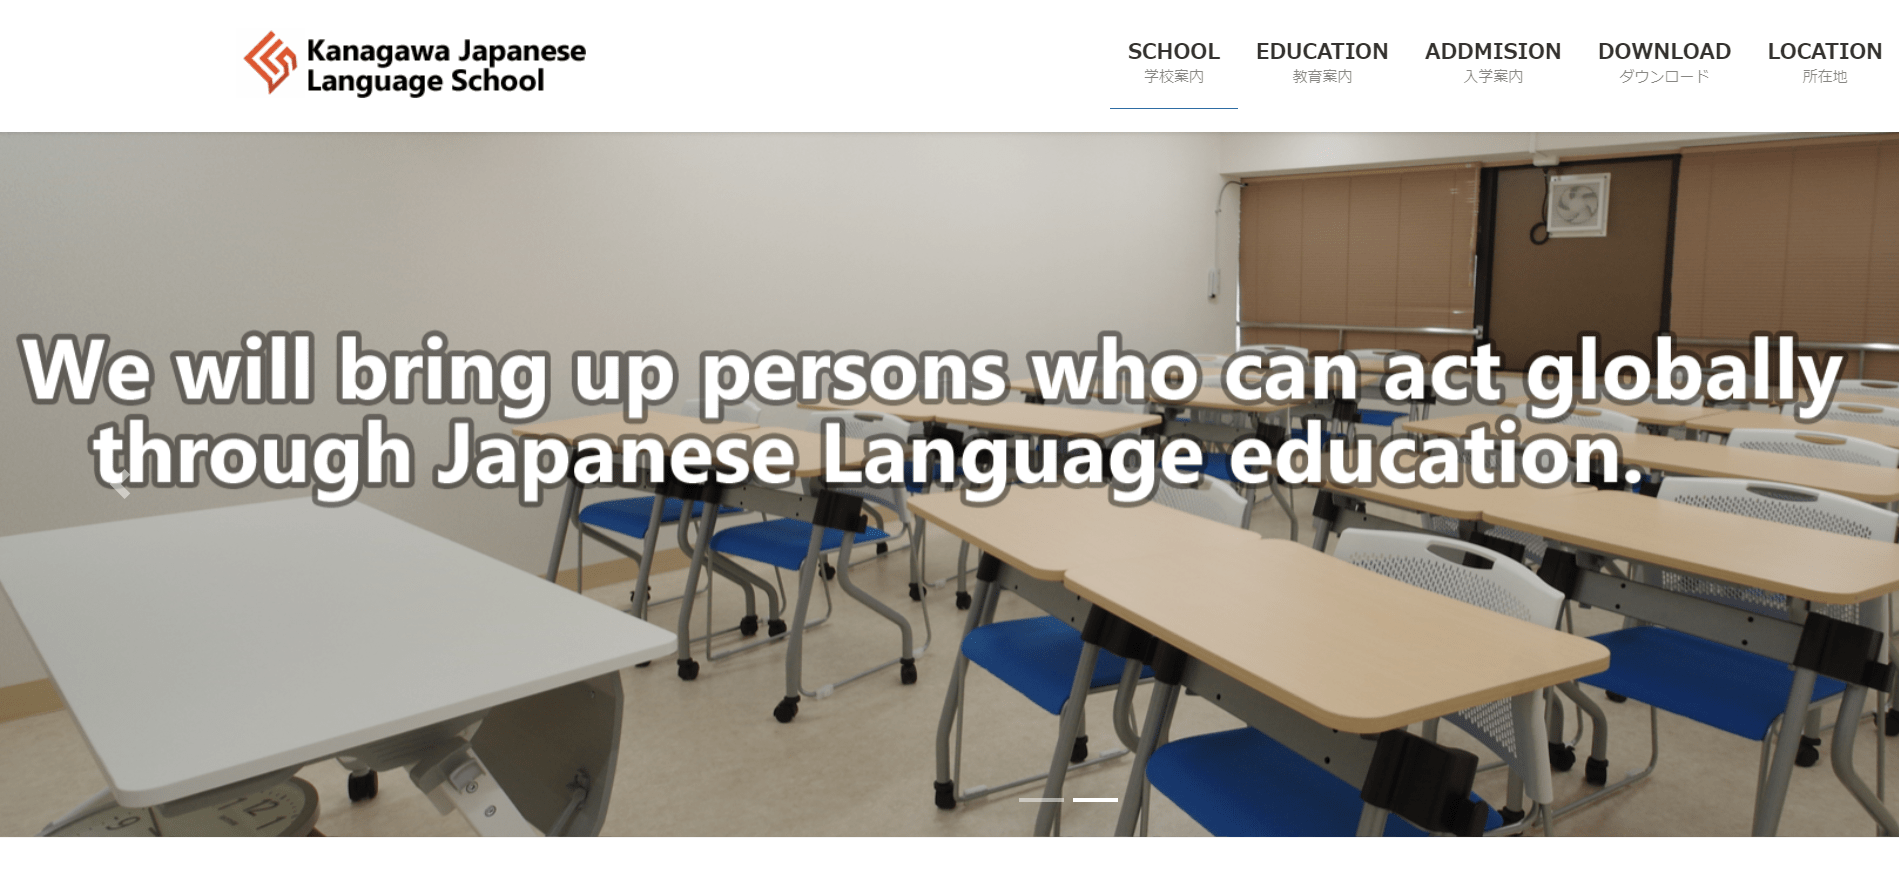 Kanagawa Japanese Language School website